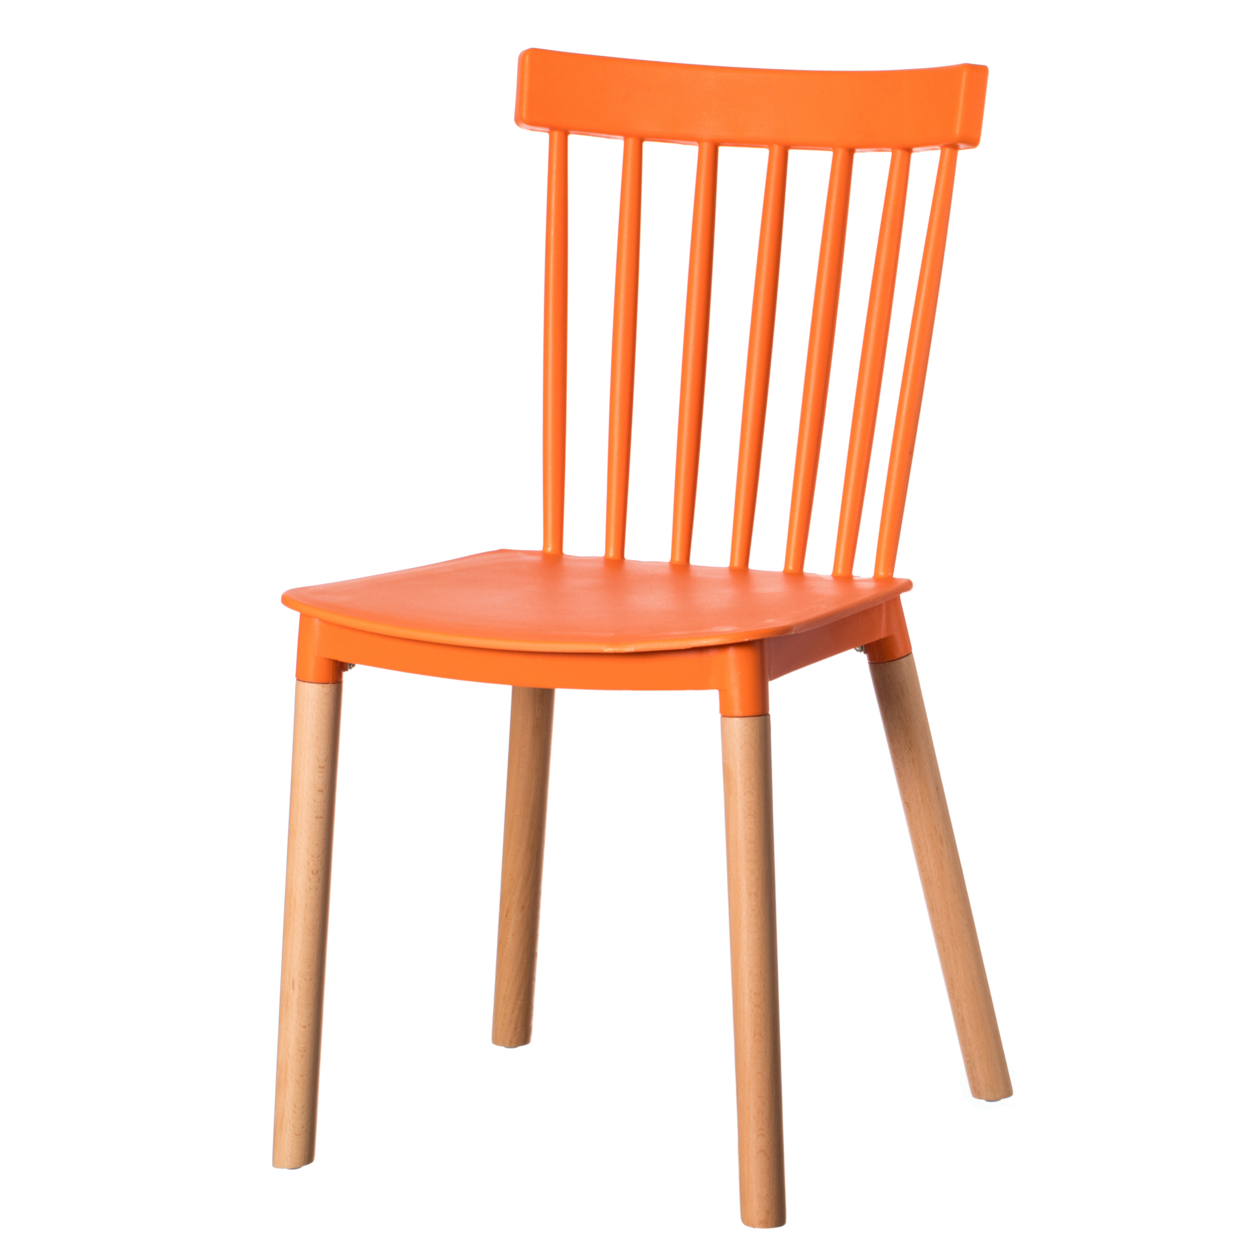 Modern Plastic Dining Chair Windsor Design With Beech Wood Legs - Single Yellow